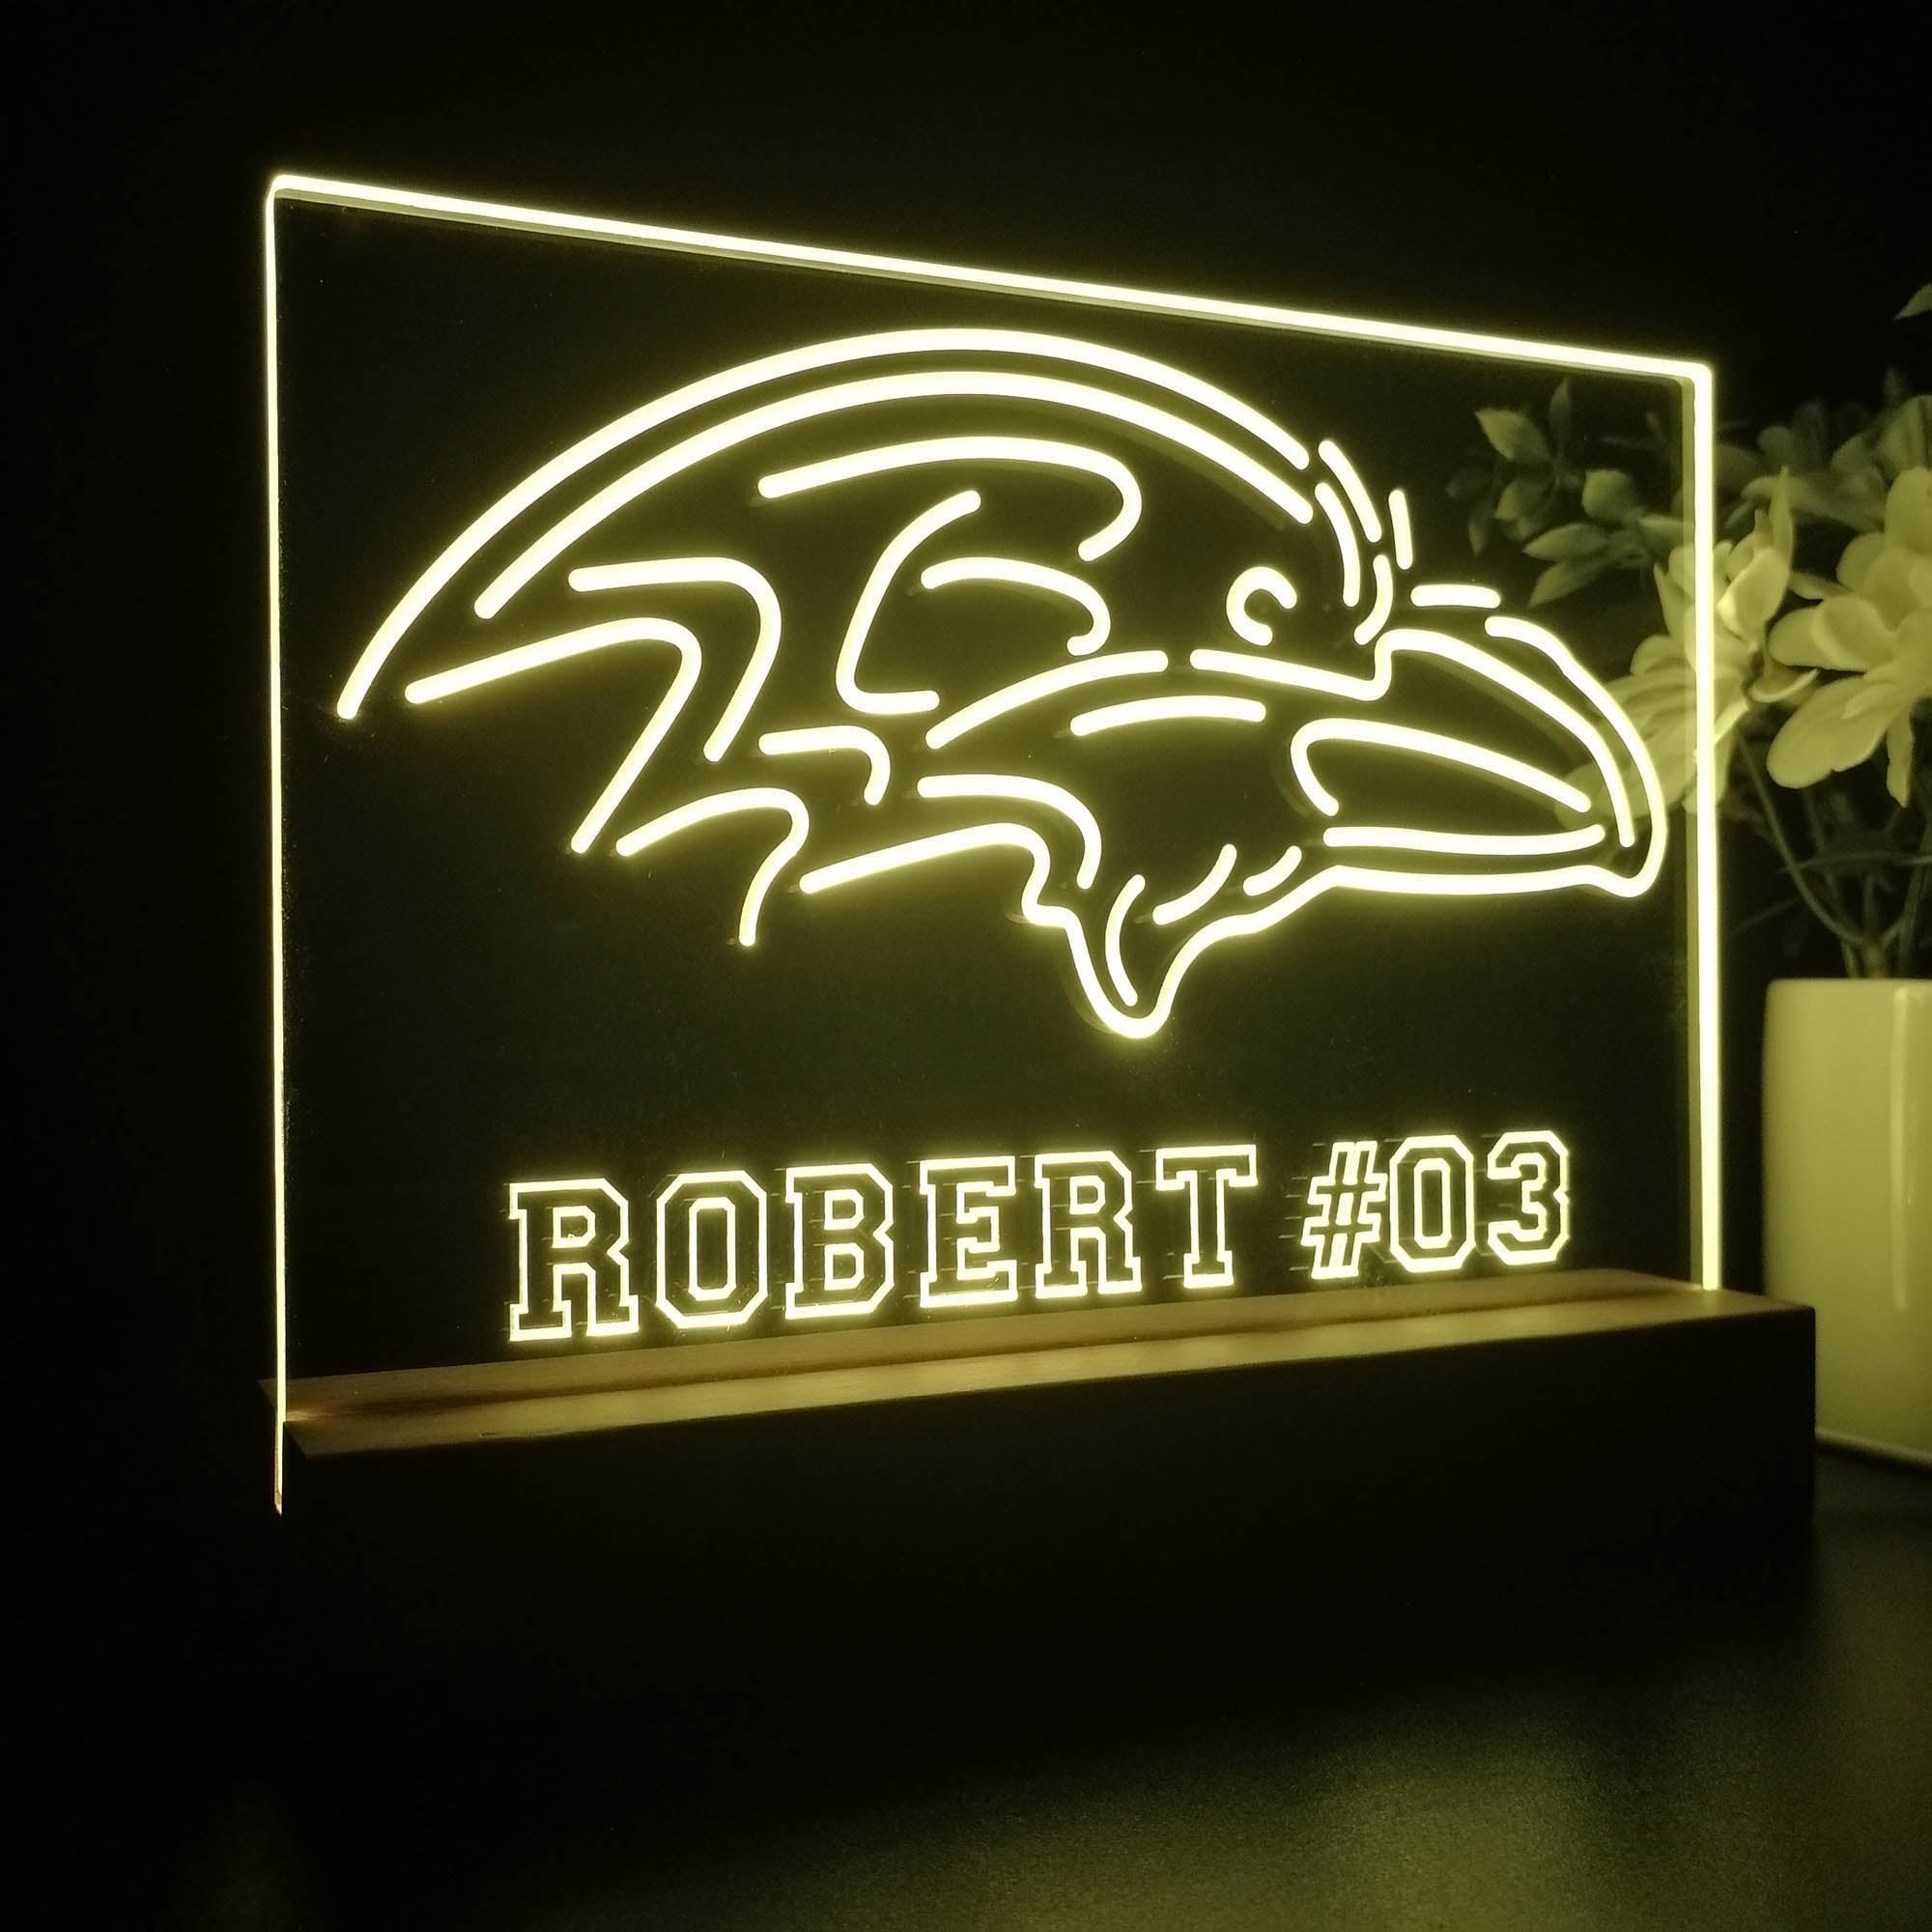 Personalized Baltimore Ravens Souvenir Neon LED Night Light Sign